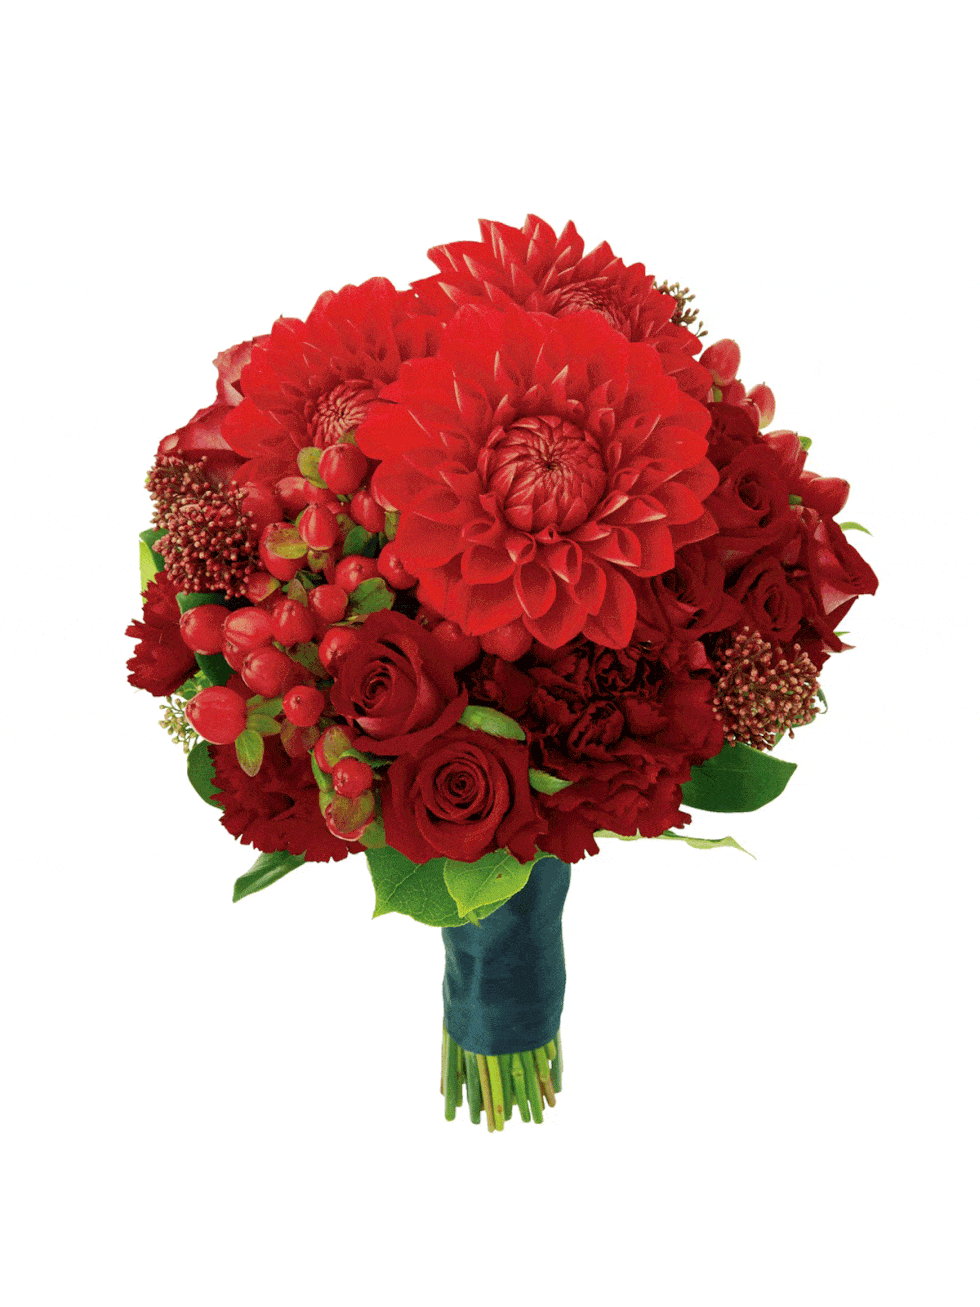 Petal, Bouquet, Flower, Red, Cut flowers, Floristry, Flowering plant, Flower Arranging, Botany, Floral design, 